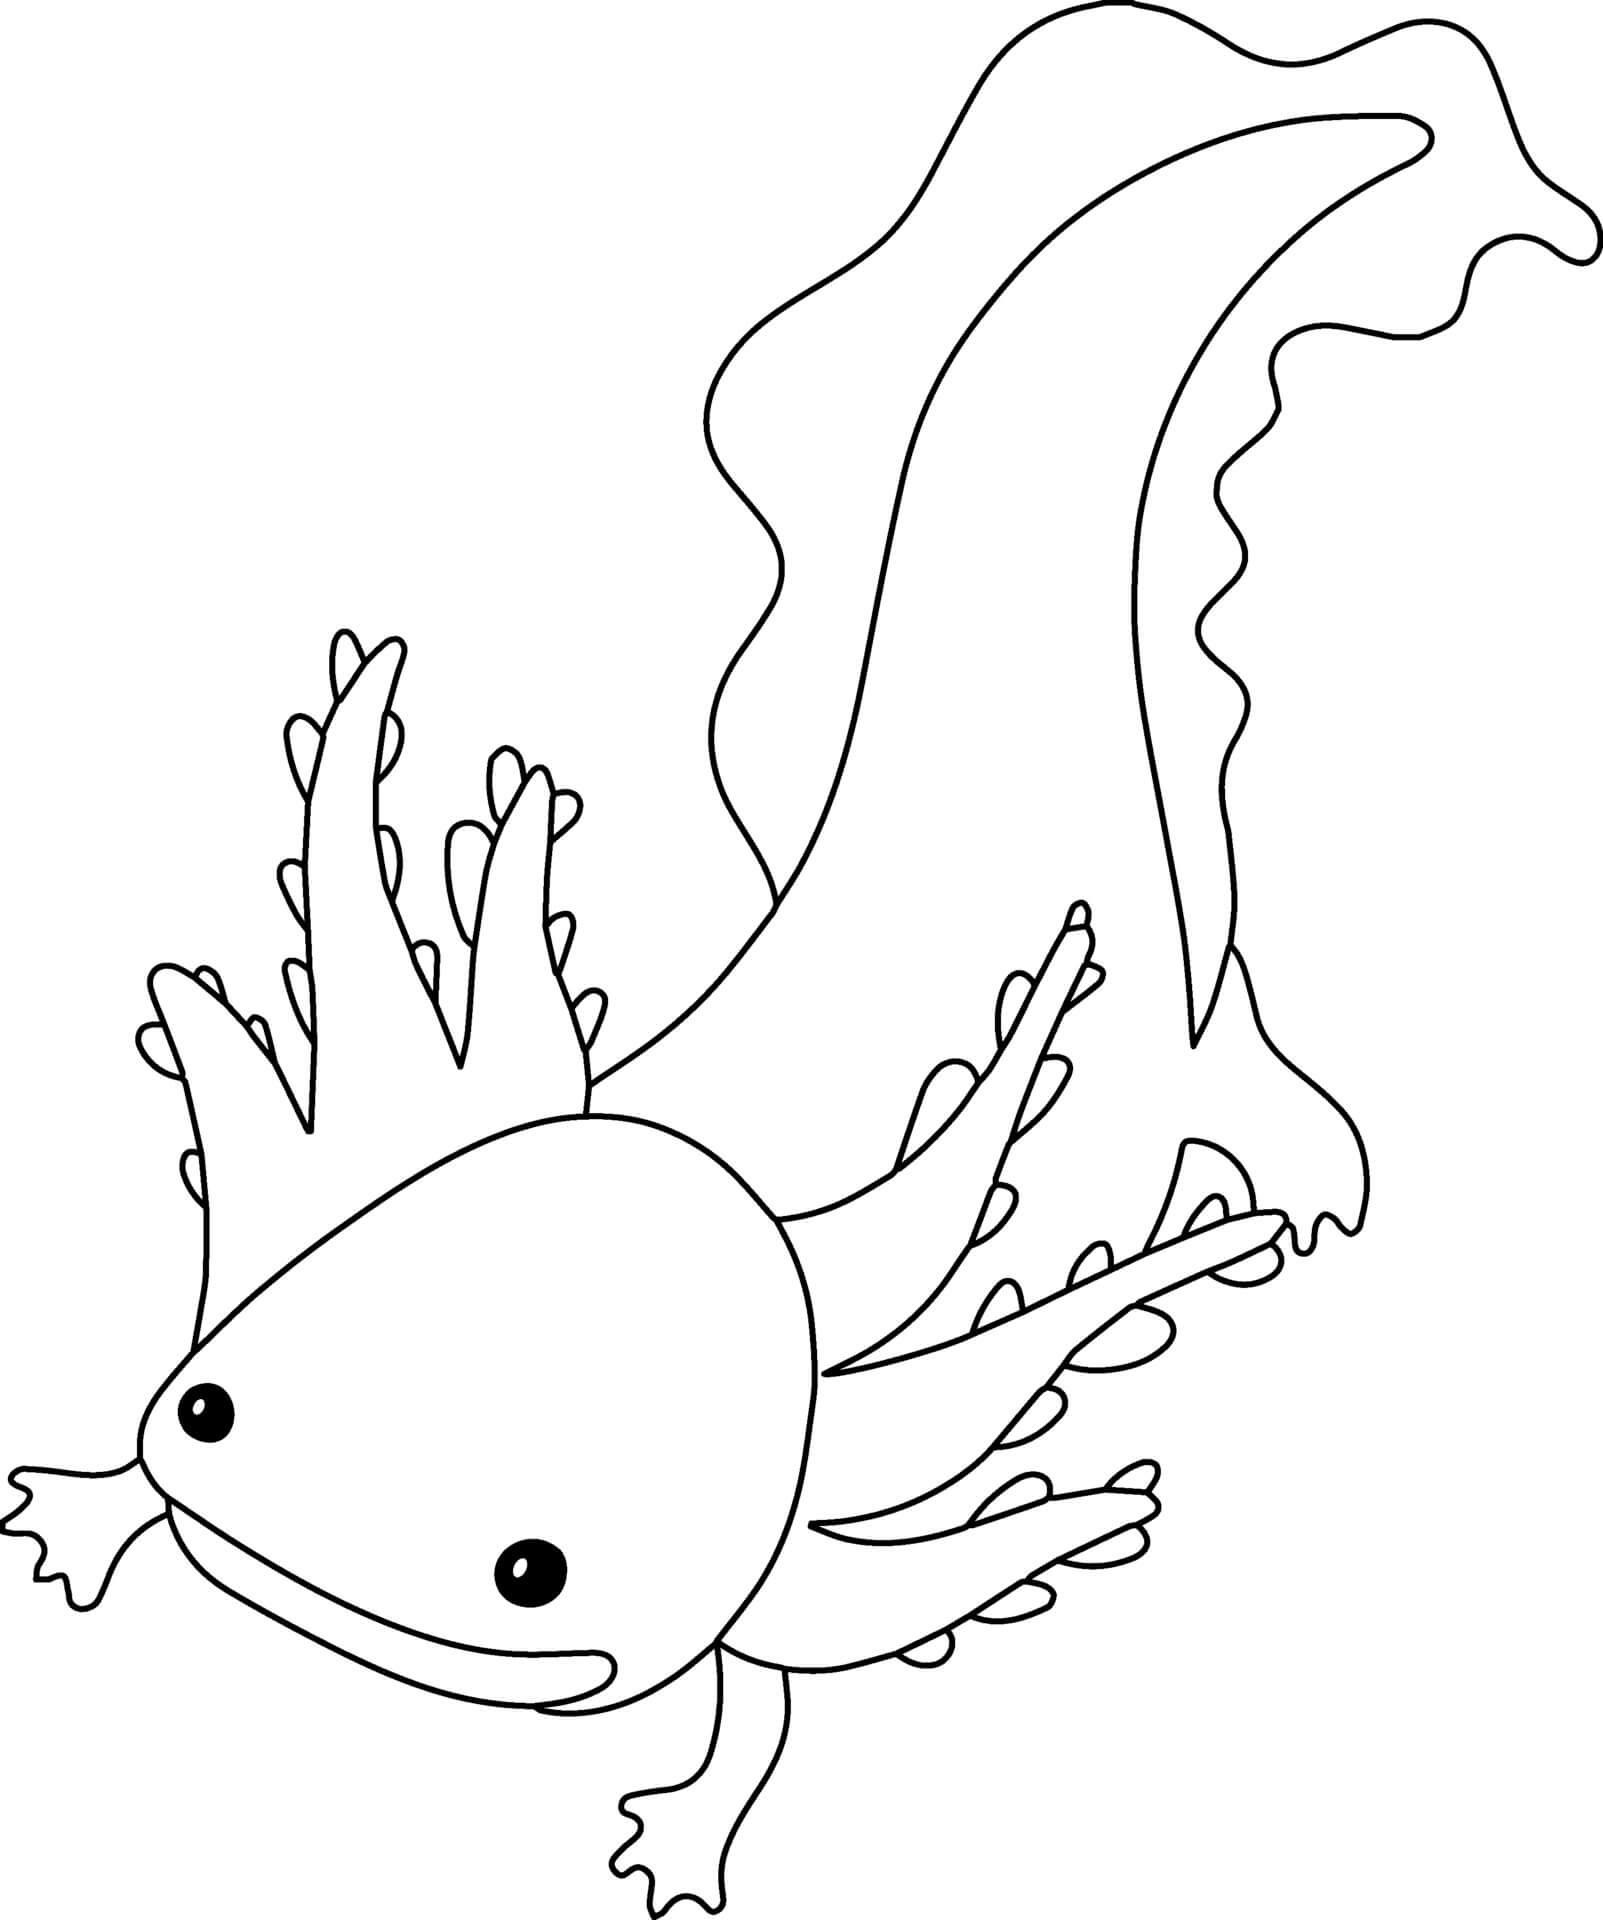 Axolotl Coloring Pages to Print - Free Printable Axolotl Coloring Pages